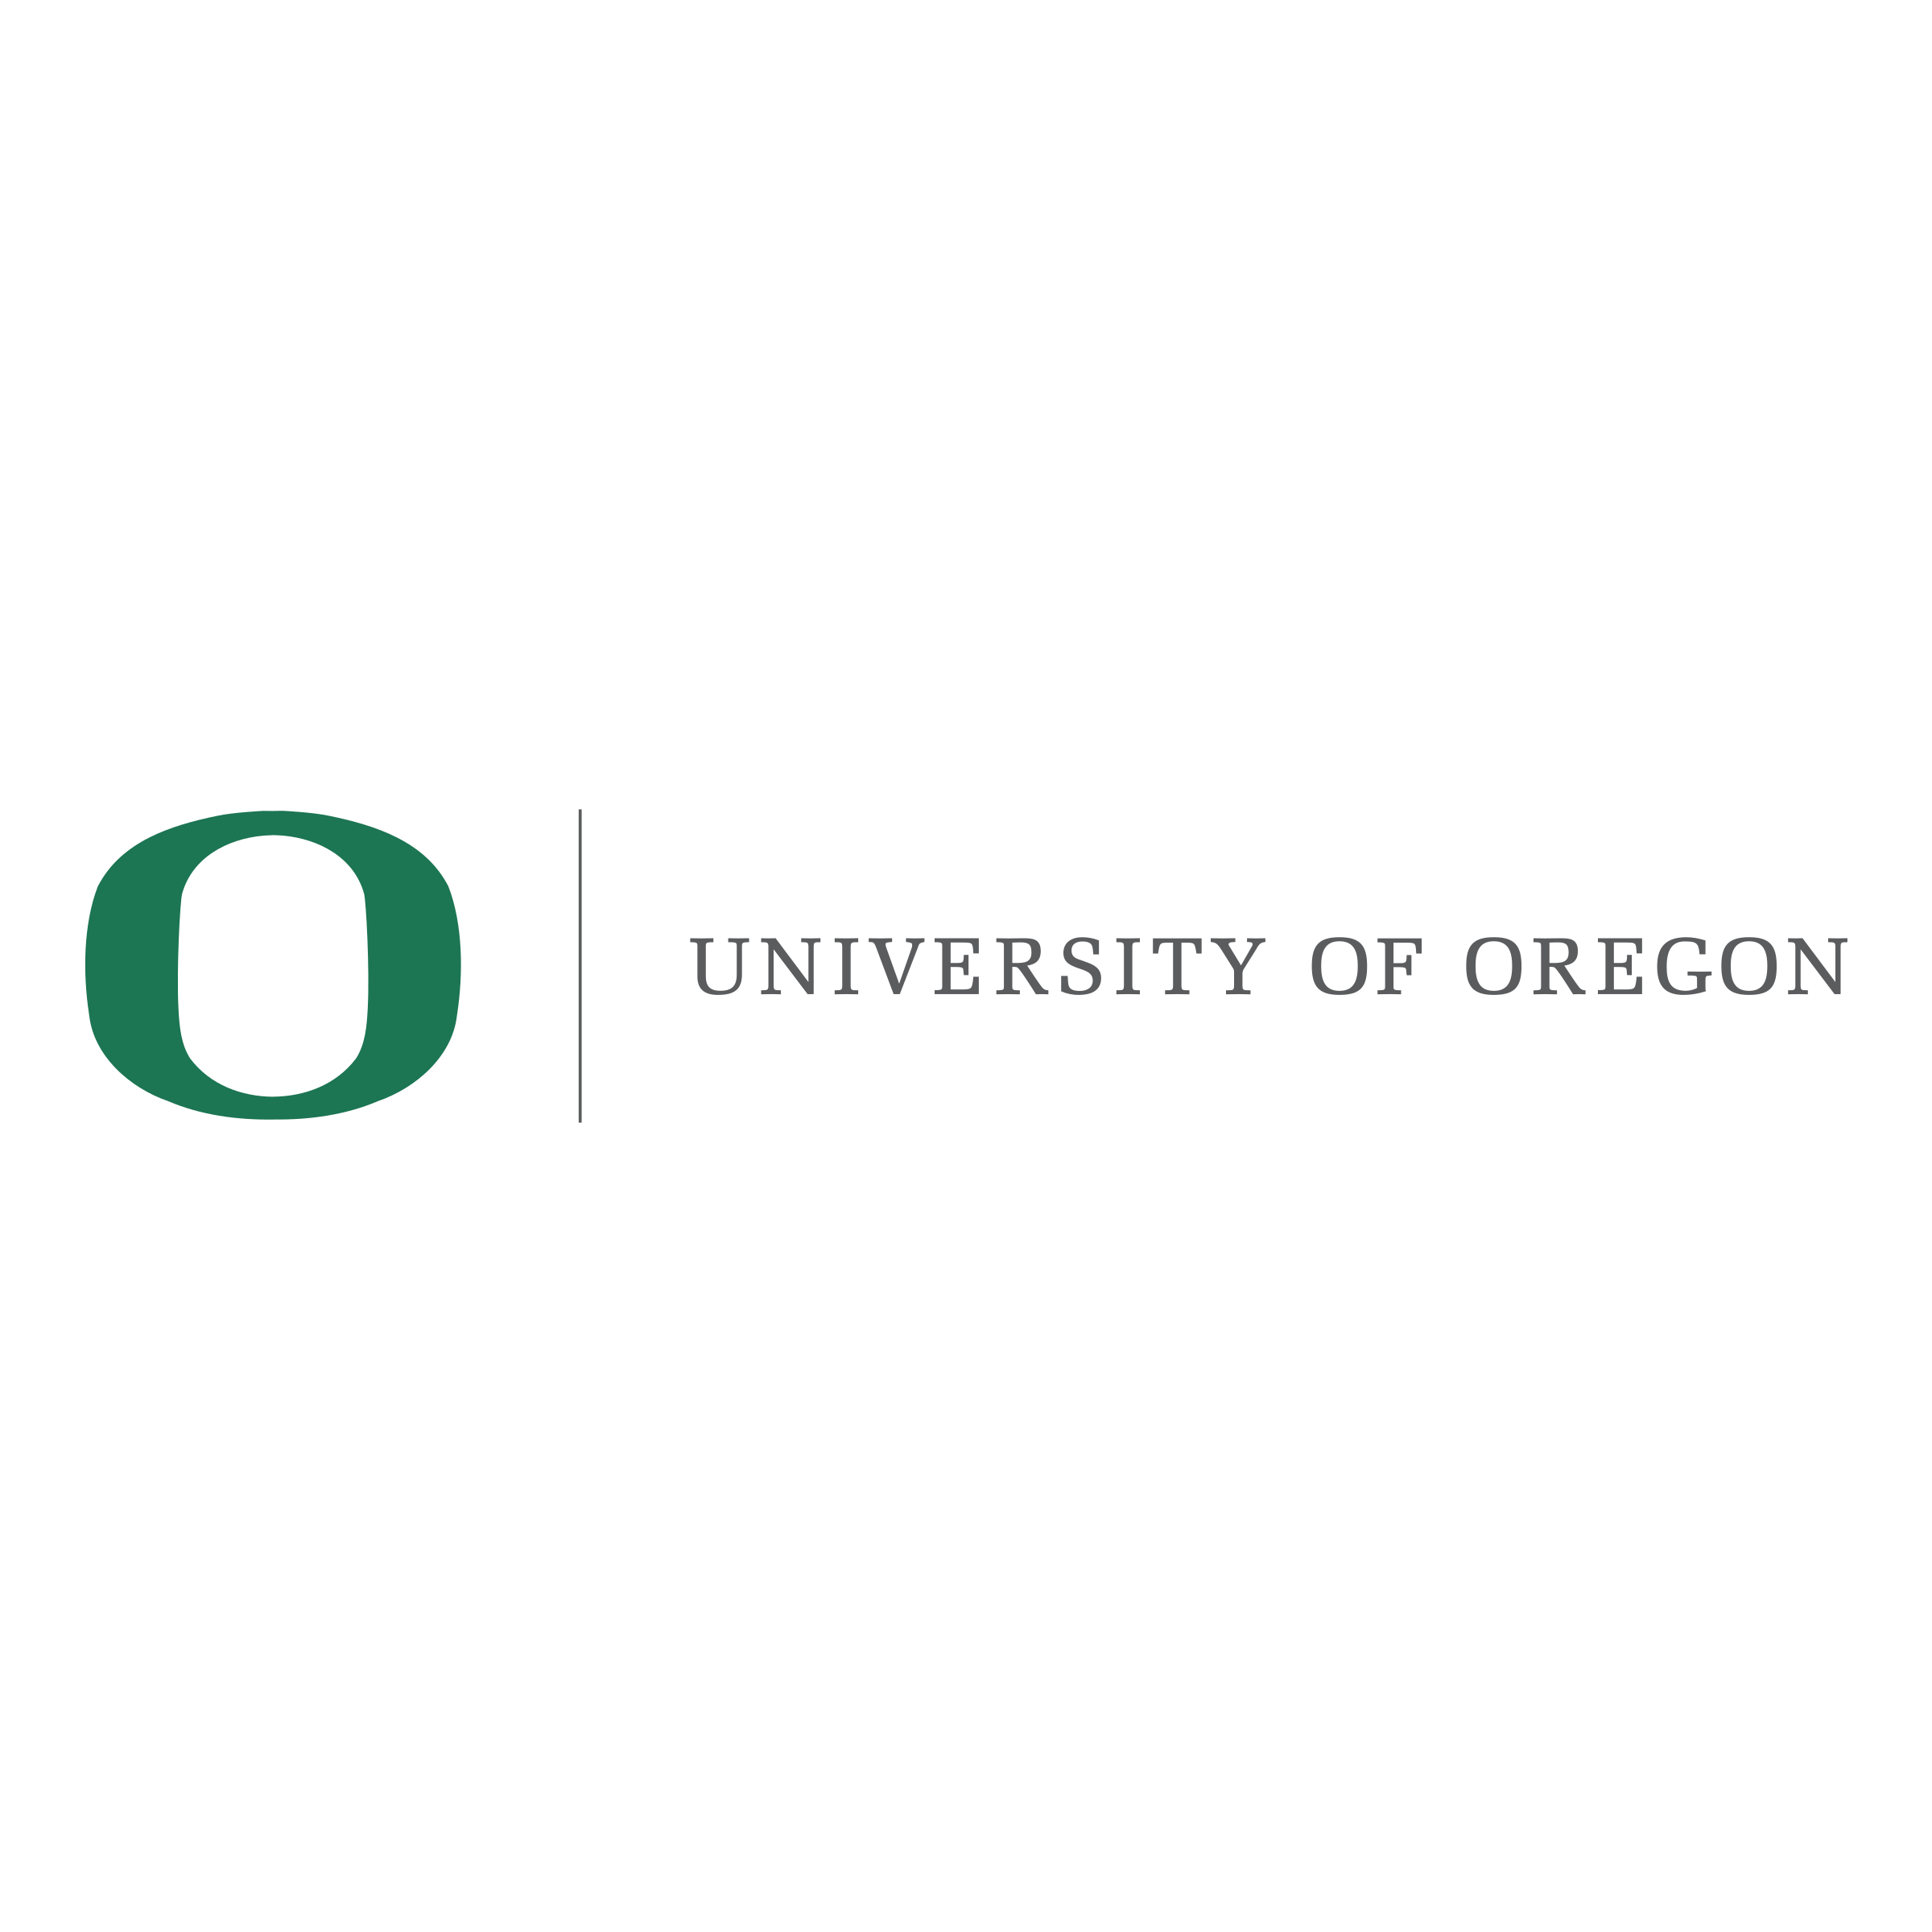 university-of-oregon-2-logo-png-transparent.png